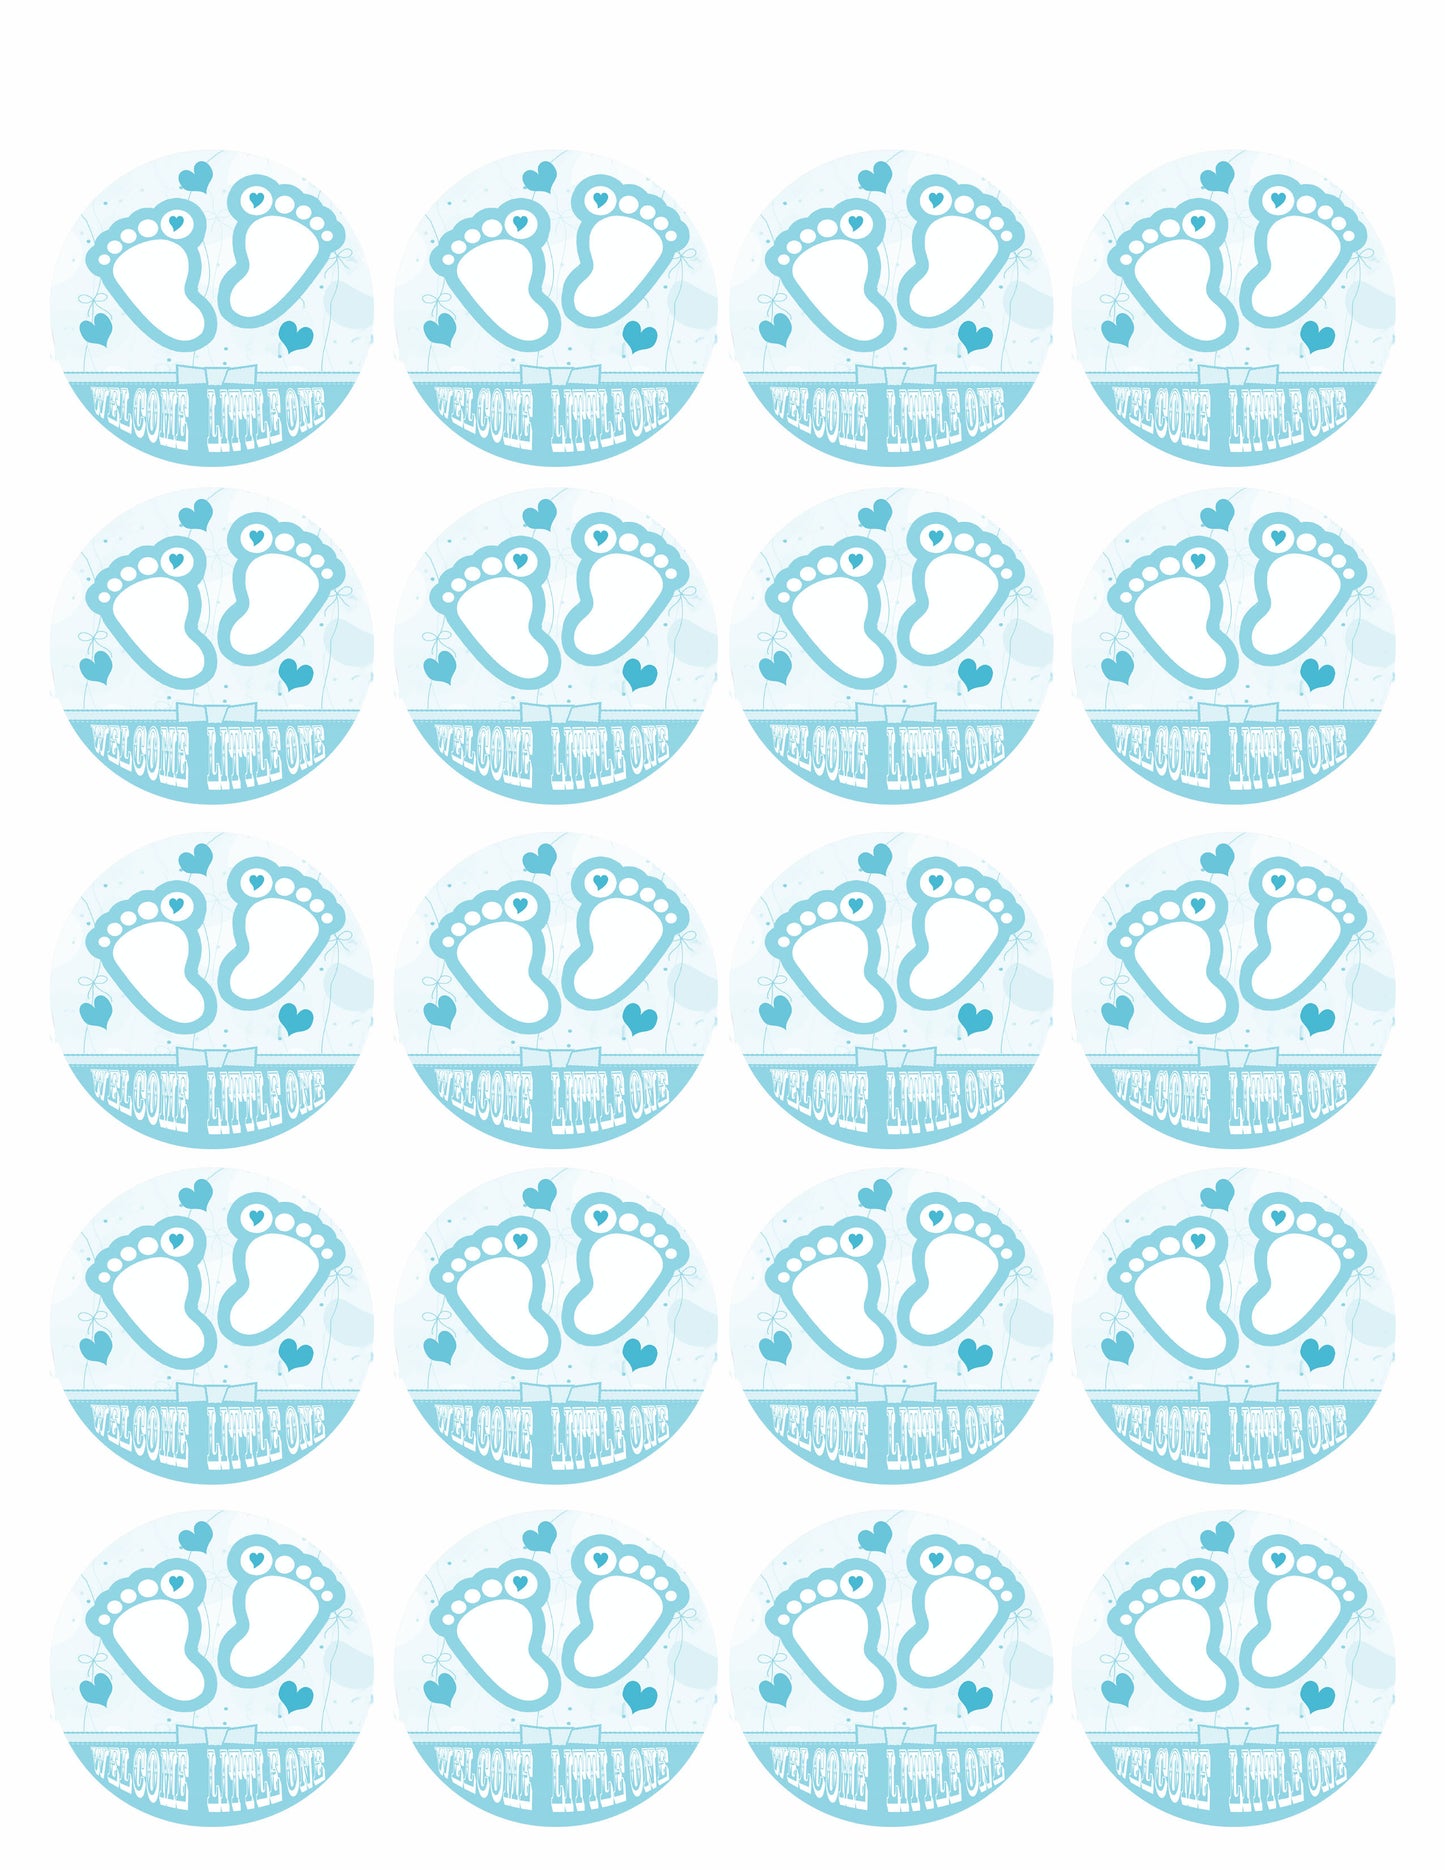 Blue Baby Feet Foot - Edible Cake Topper OR Cupcake Topper, Decor